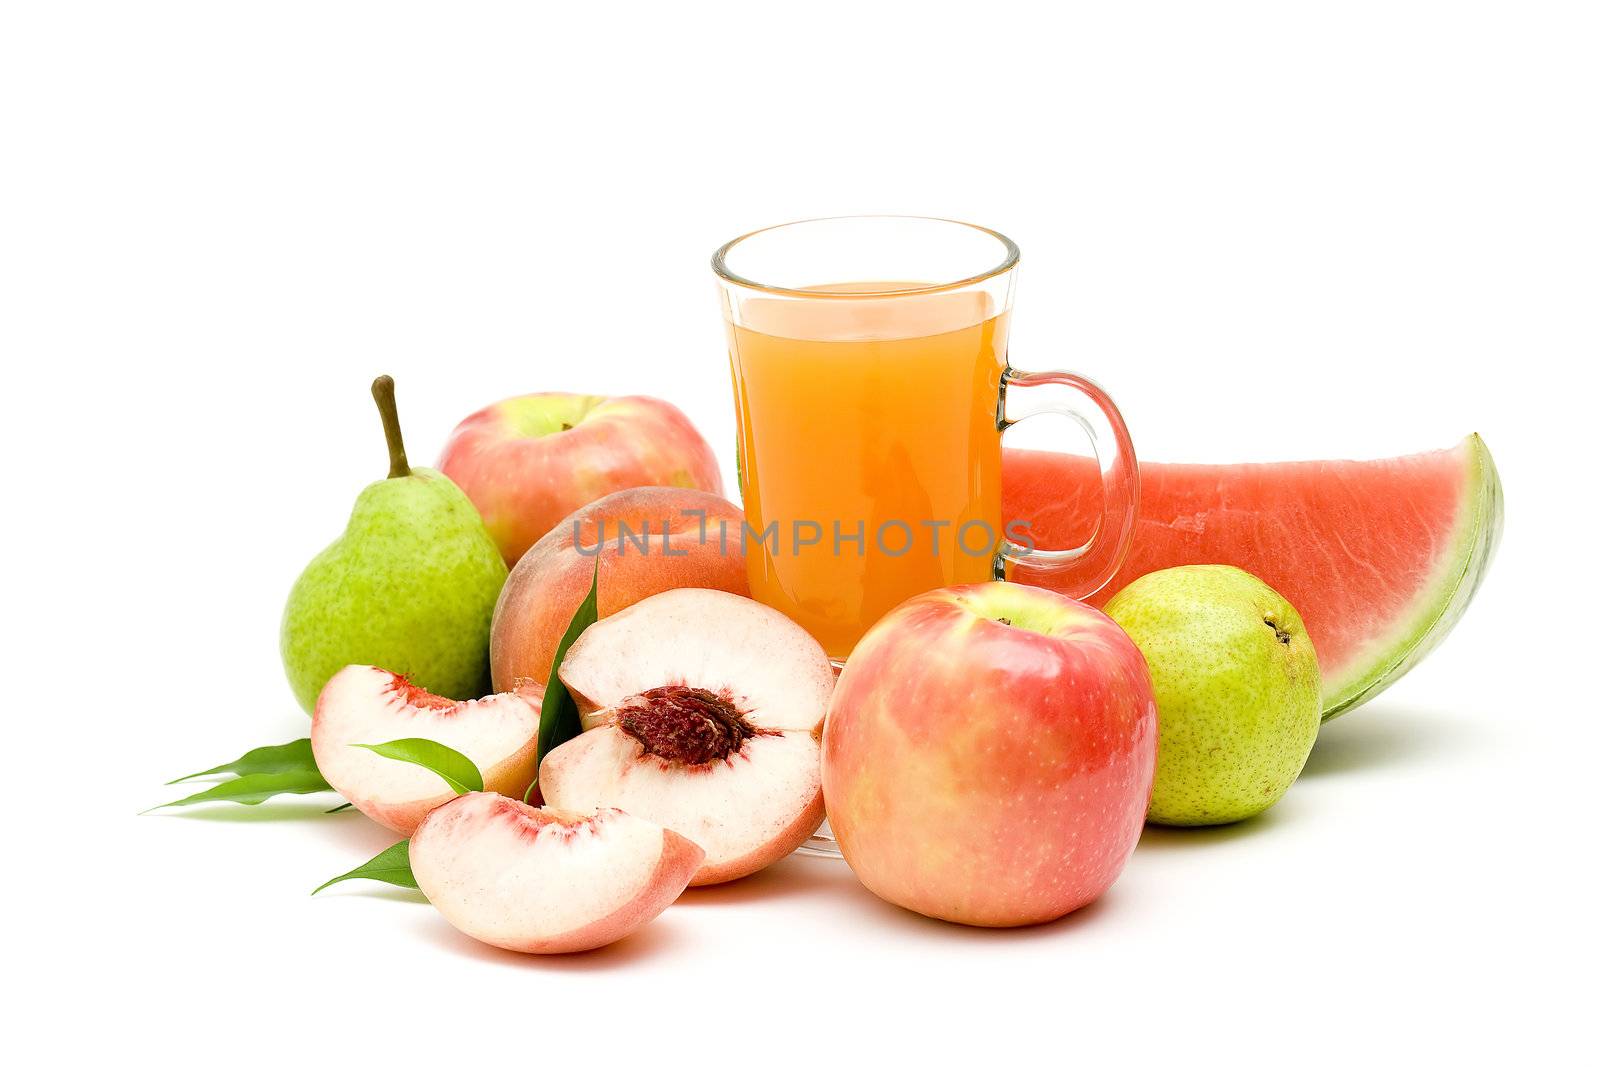 fruit juice and some fresh fruits by miradrozdowski